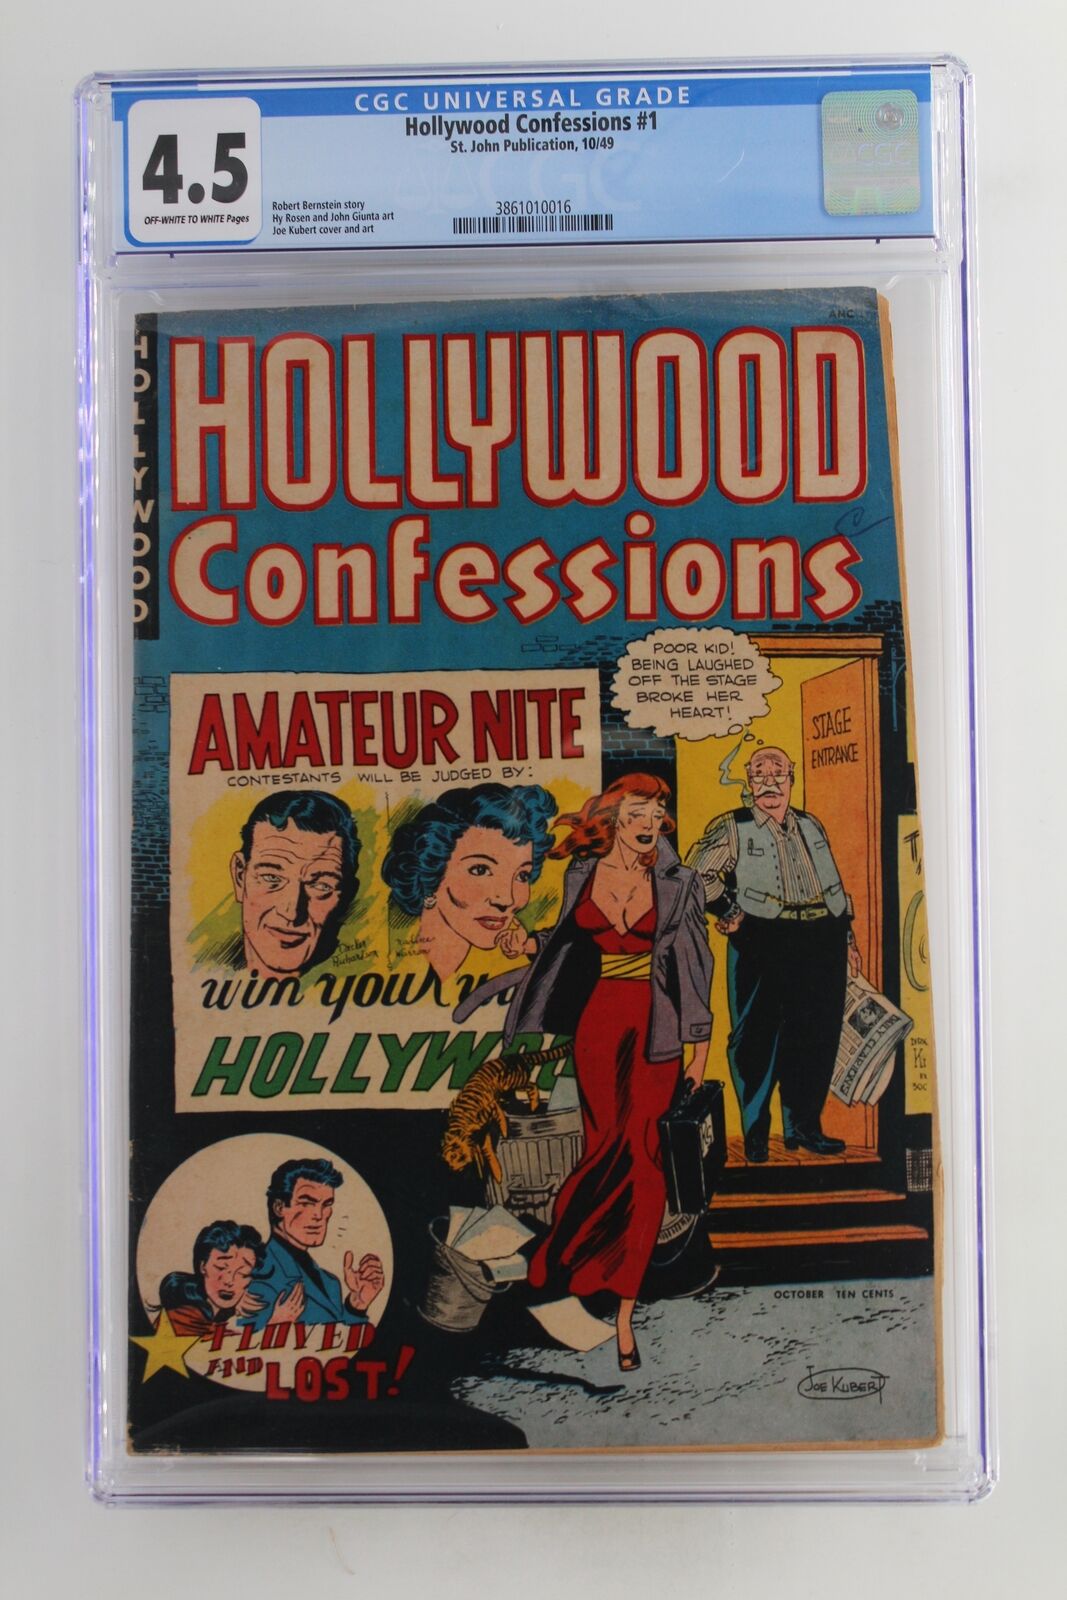 Hollywood Confessions #1 - St. John 1949 CGC 4.5 